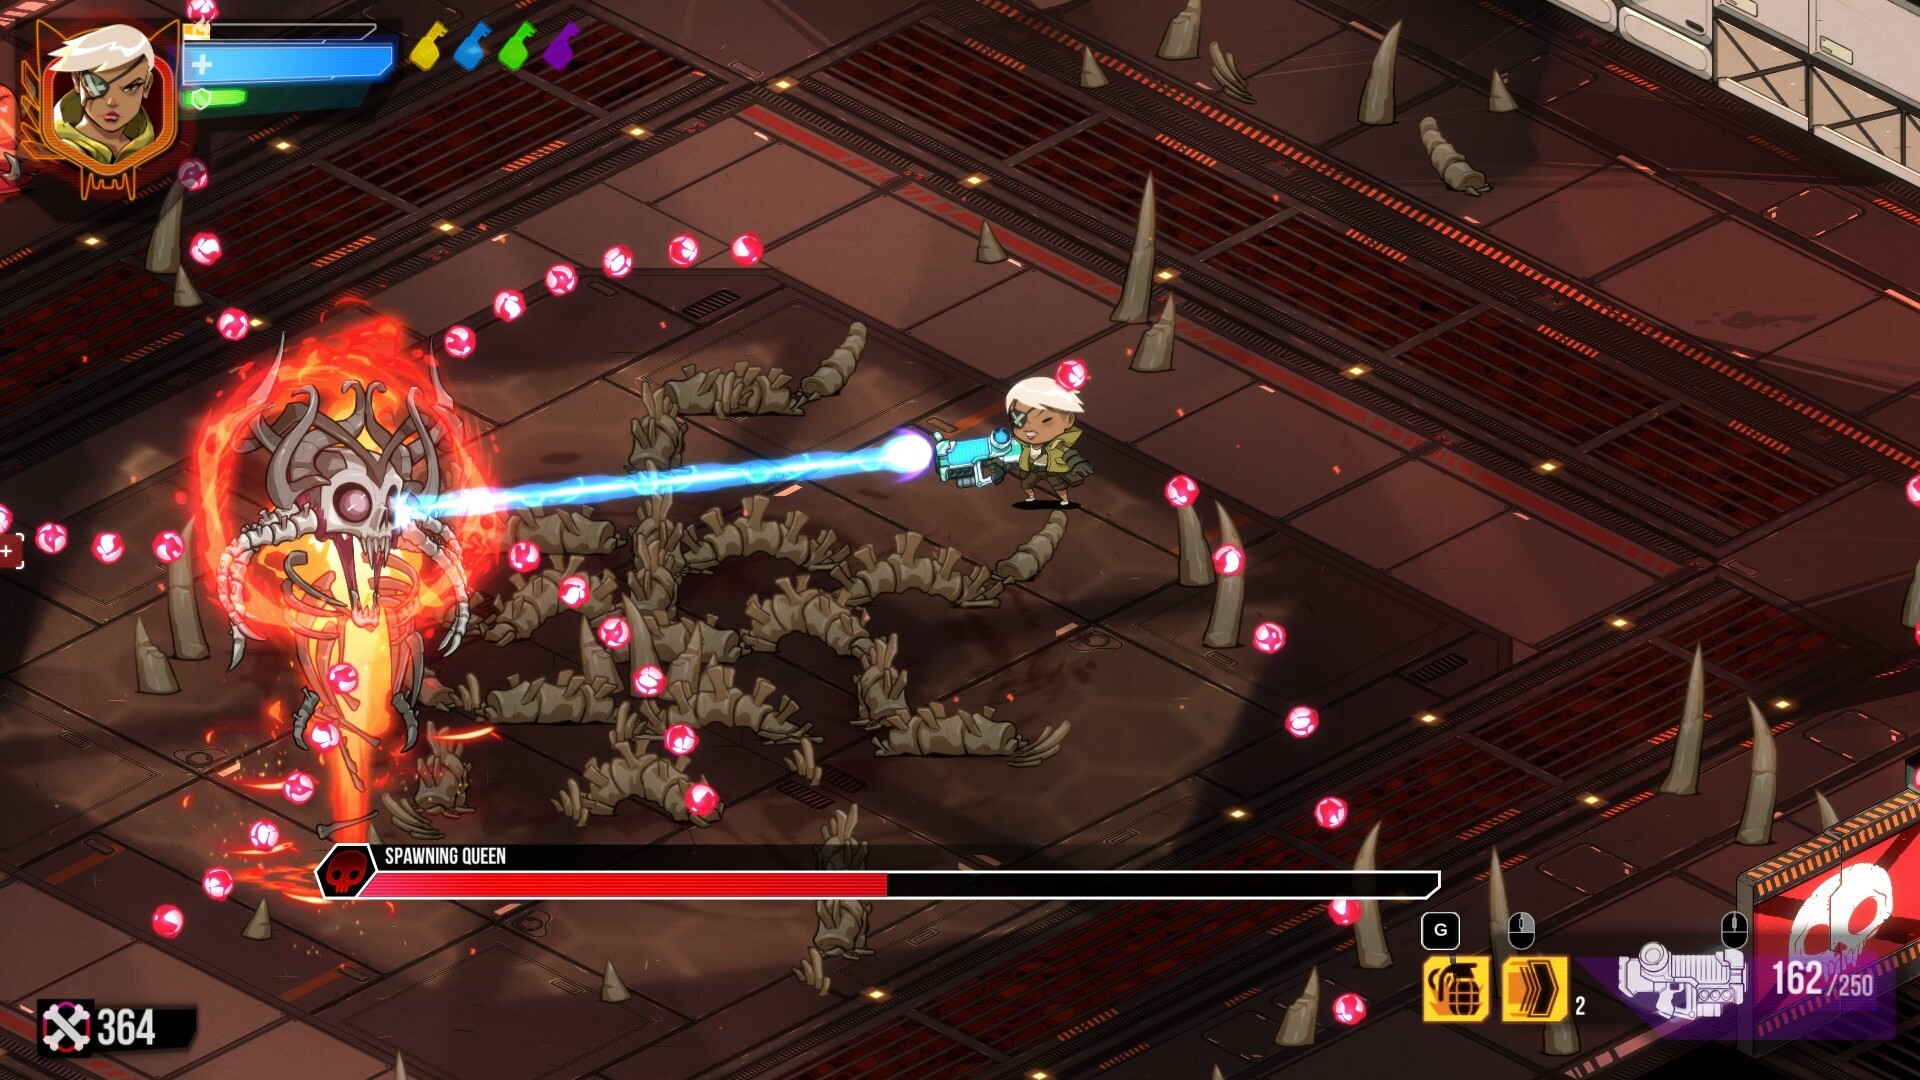 Wildcat Gun Machine game screenshot, Spawning Queen boss fight